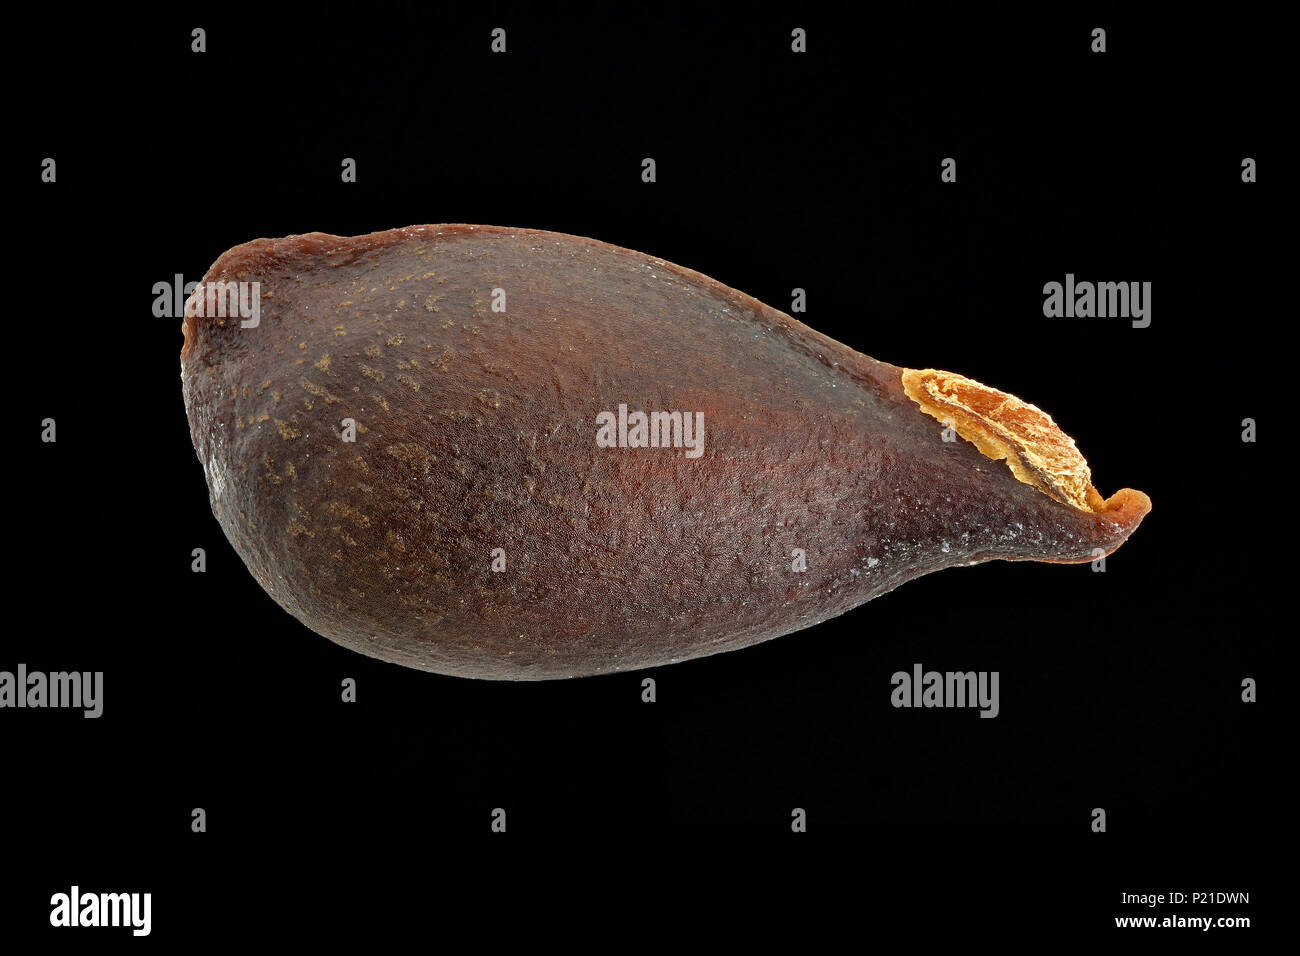 Pyrus communis, Pear, Kultur-Birnbaum, seed, close up, seed size 10-12 mm Stock Photo